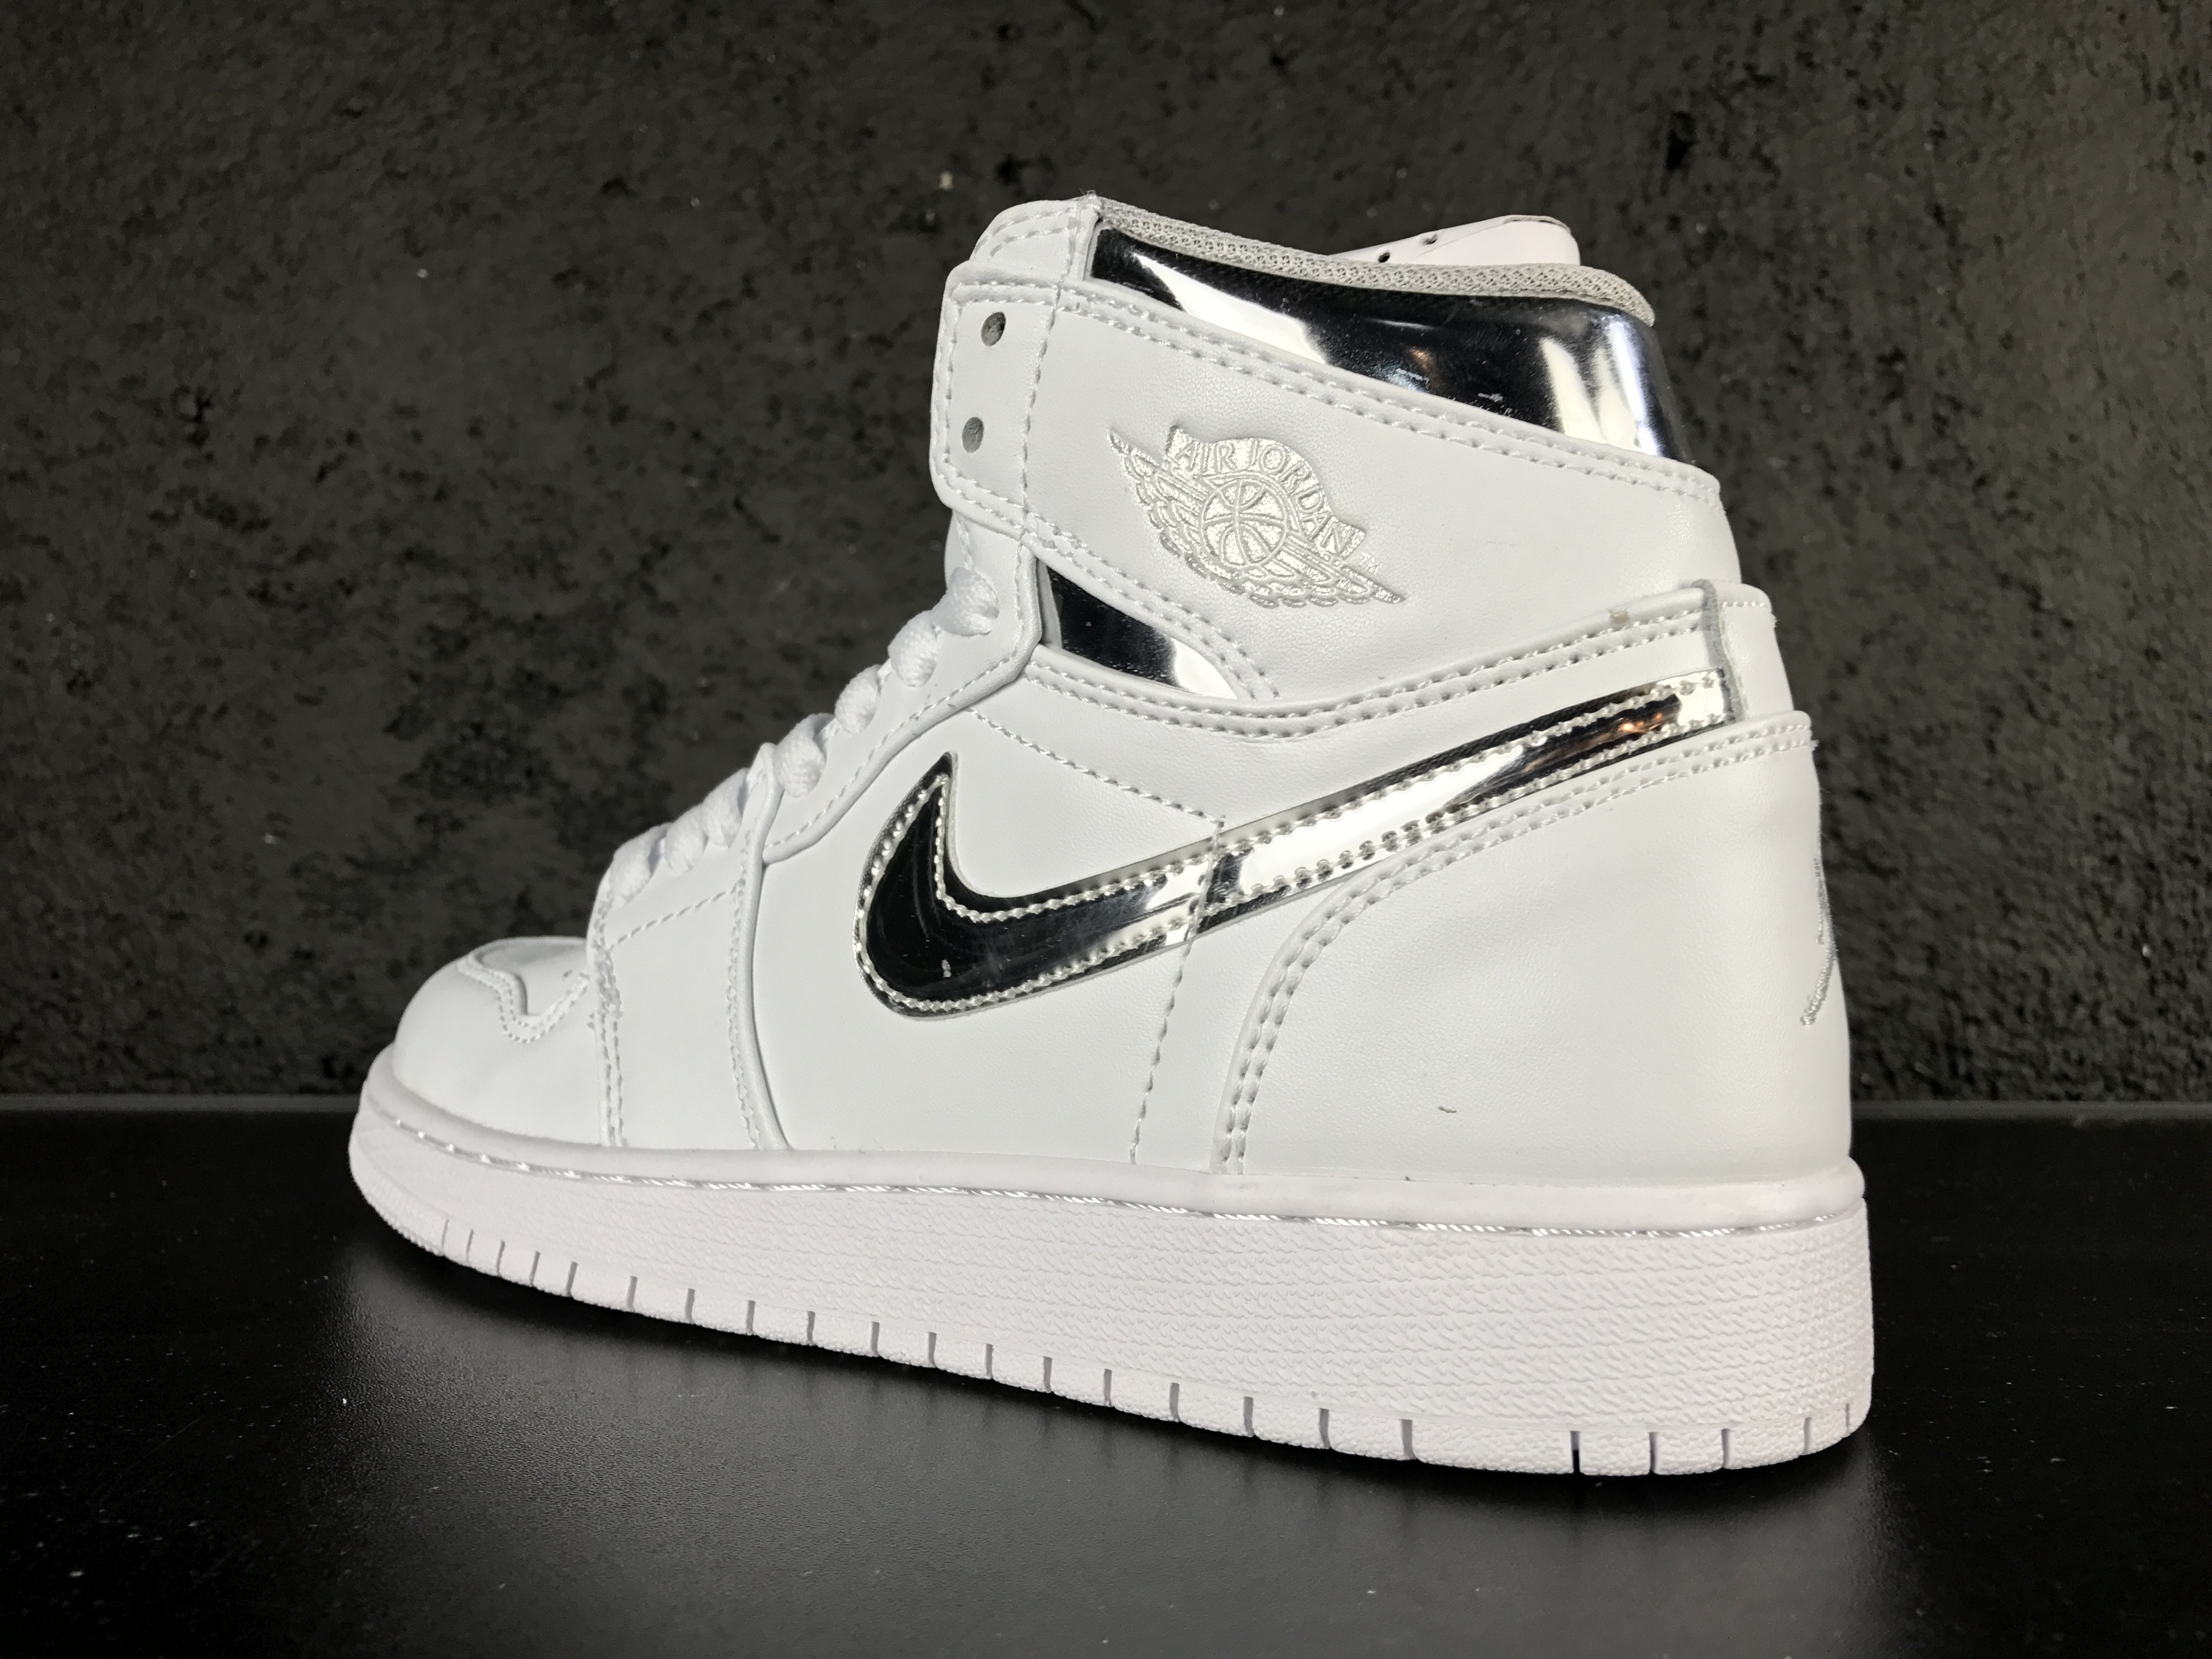 New Air Jordan 1 White Silver Shoes